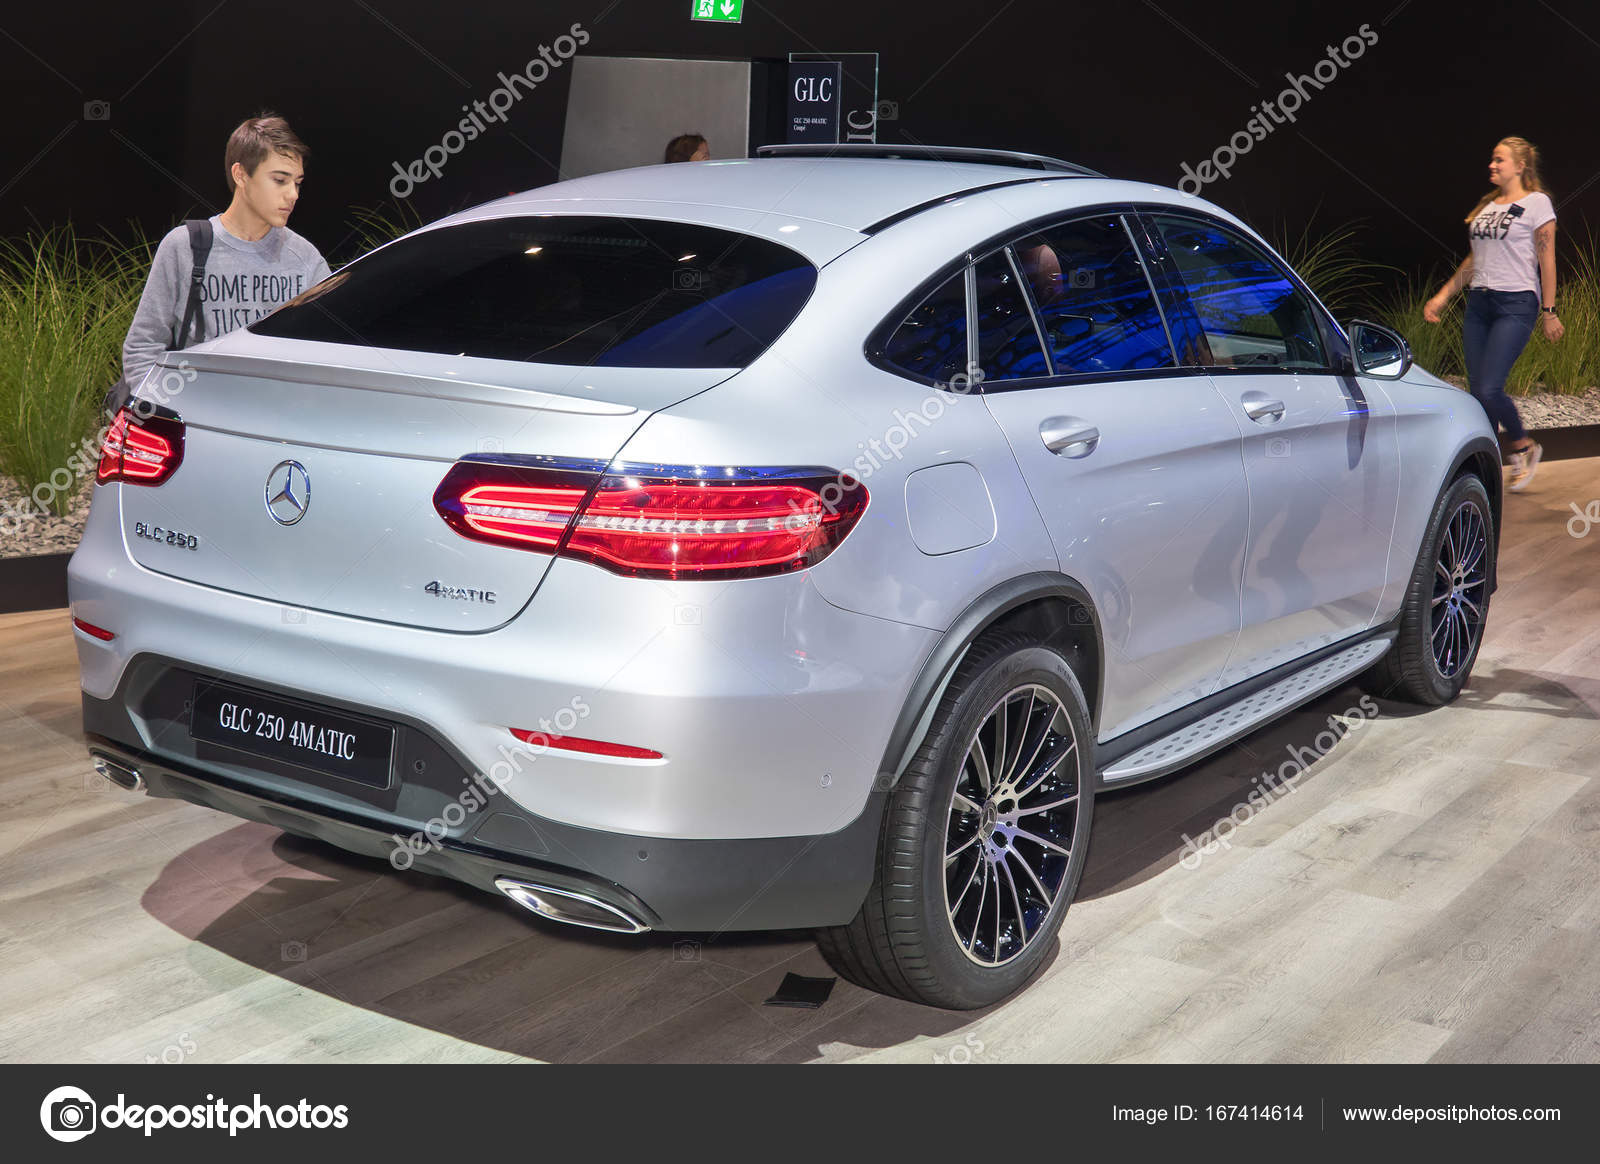 Mercedes-Benz GLC 250 4matic - Stock Editorial Photo © eans #167414614